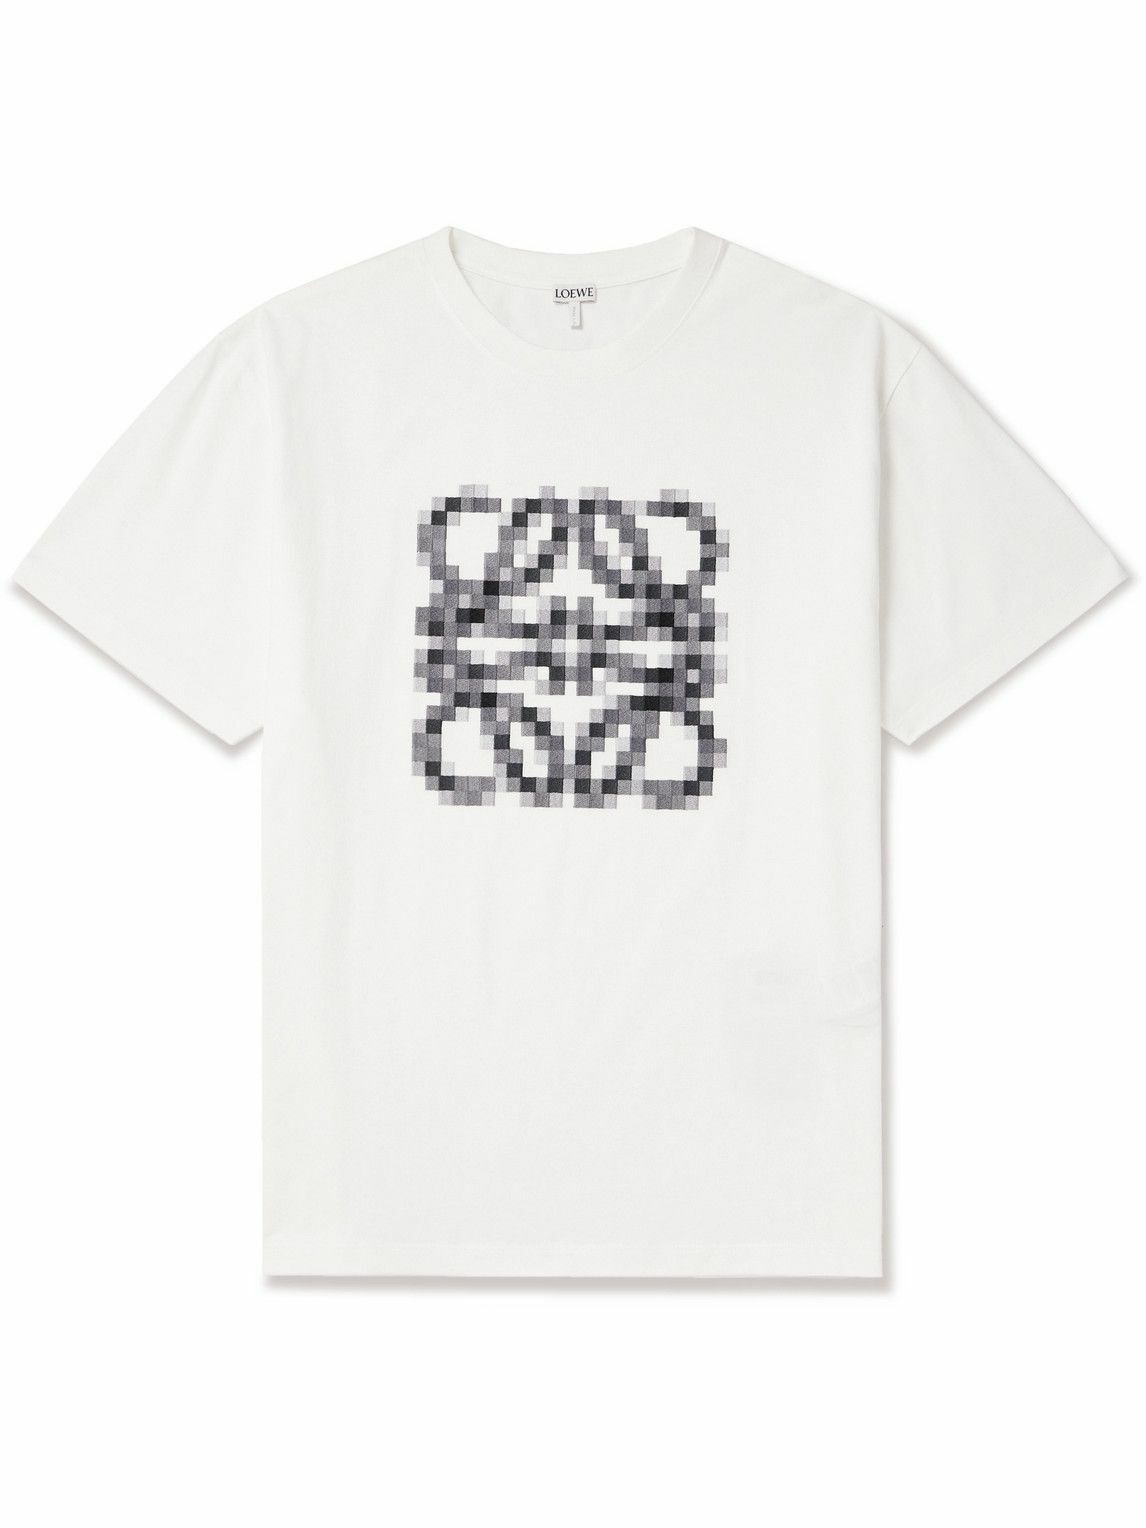 Loewe - Anagram Embroidered Cotton-Blend Jersey T-Shirt - White Loewe